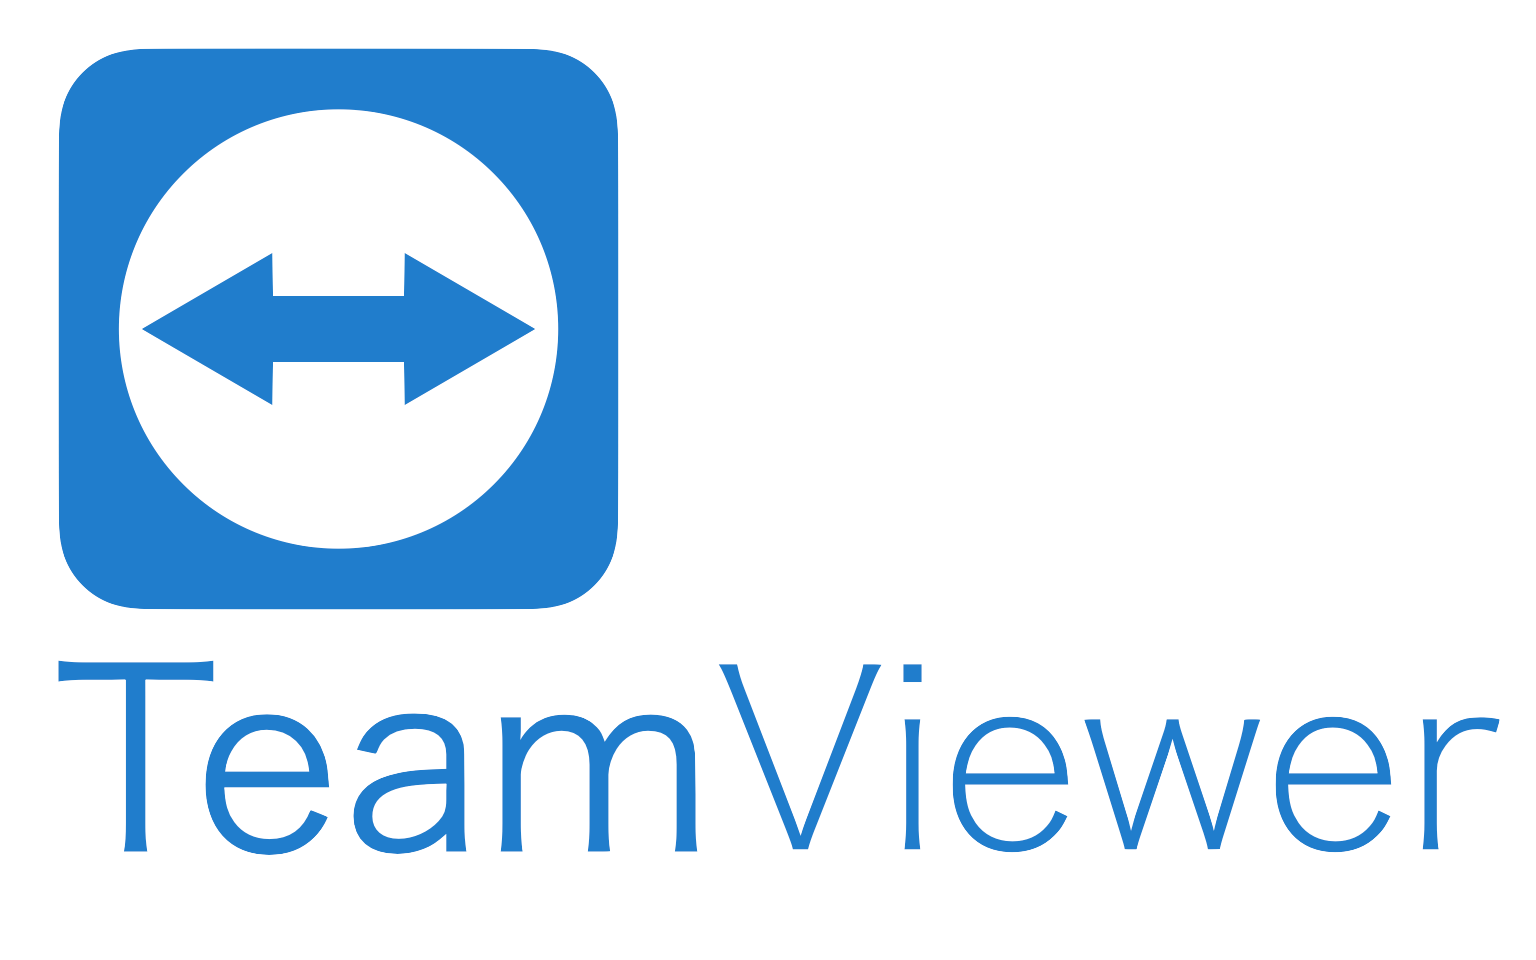 teamviewer 12 qs download